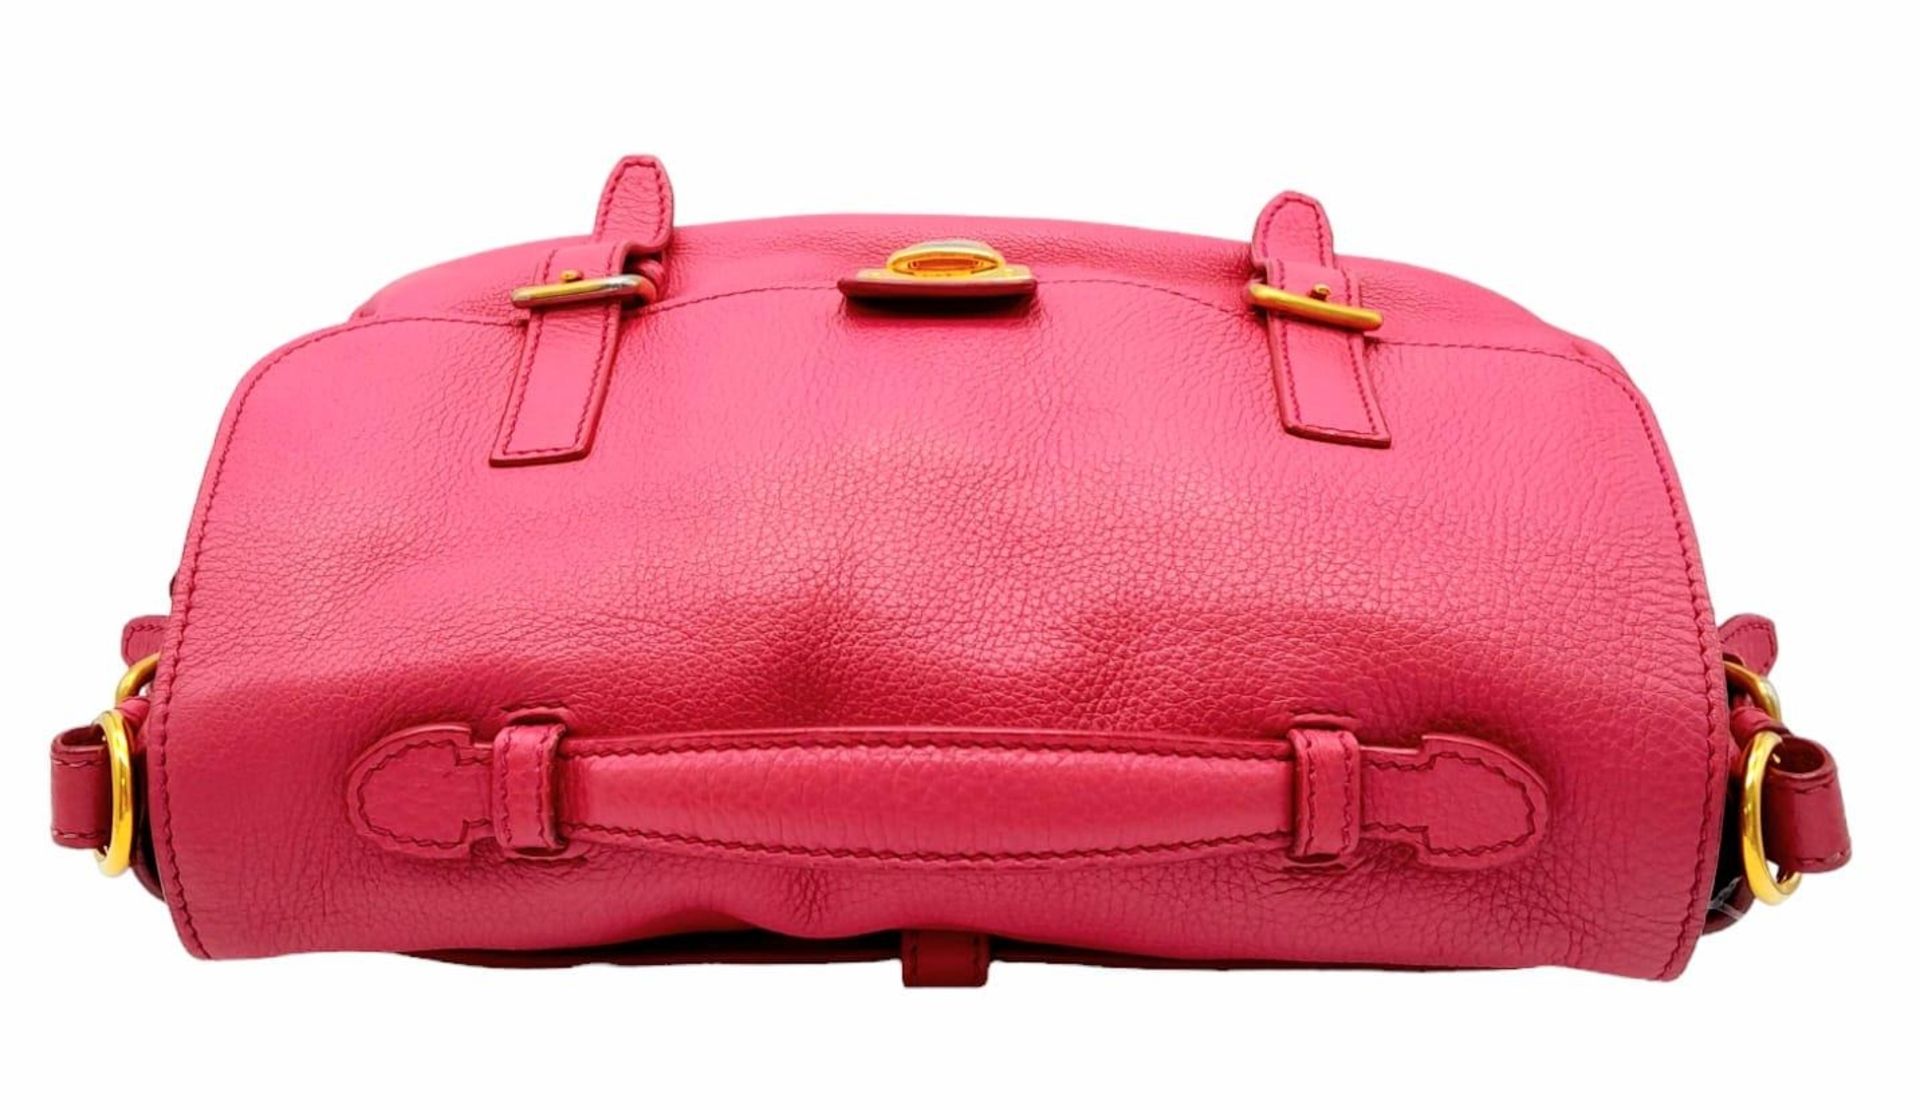 A Prada Vitello Daino satchel bag, soft pink leather, matching leather/fabric interior, gold tone - Image 4 of 11